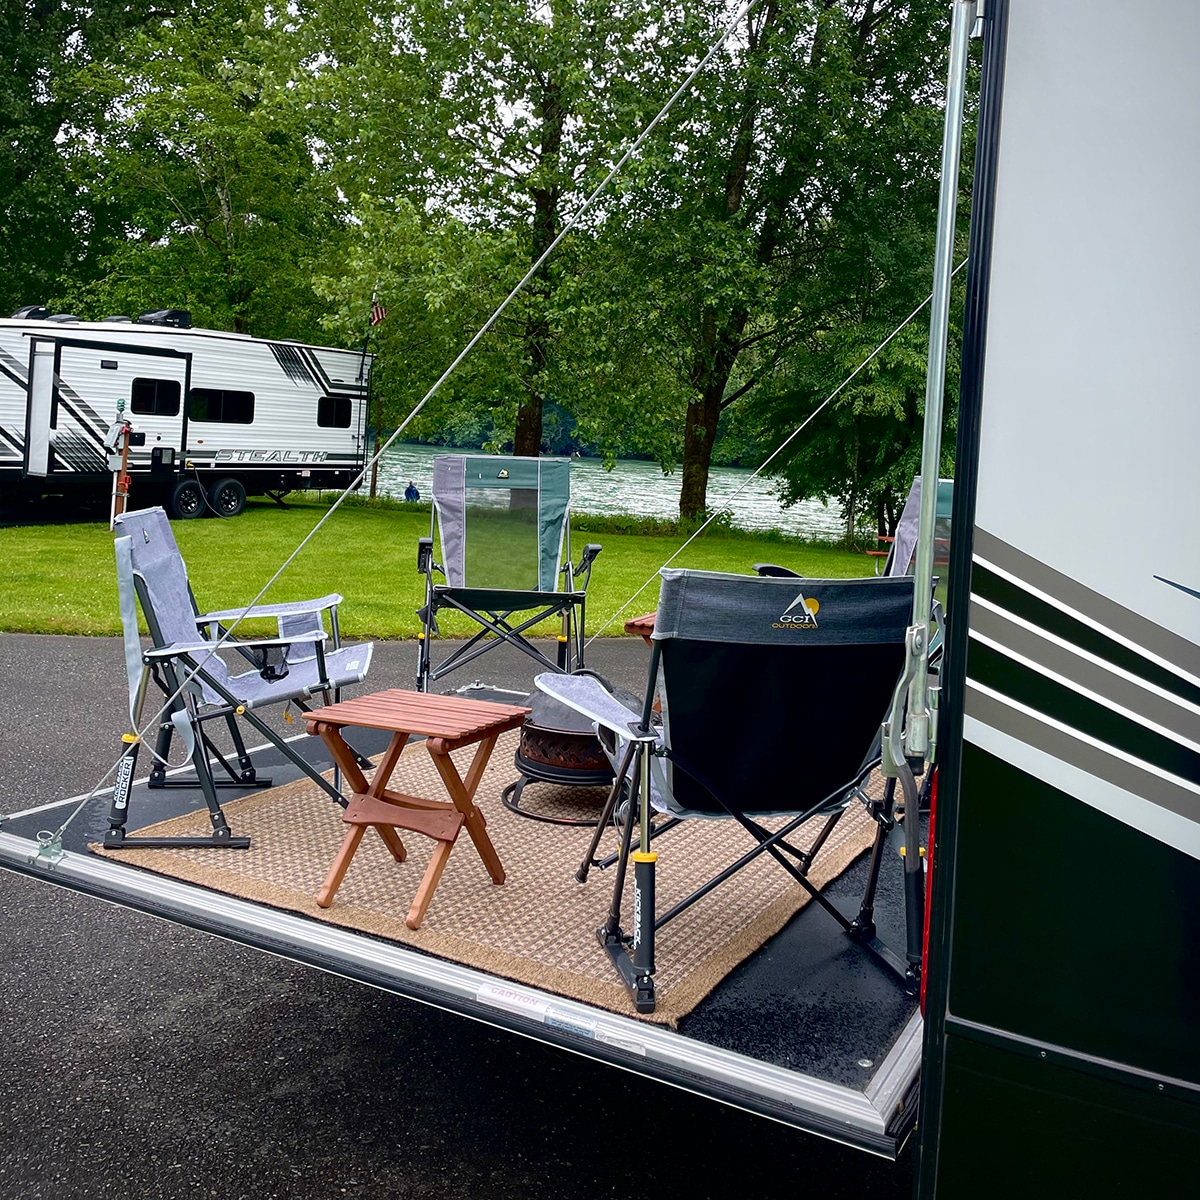 Our campsite at Howard Miller Steelhead Park in Washington.